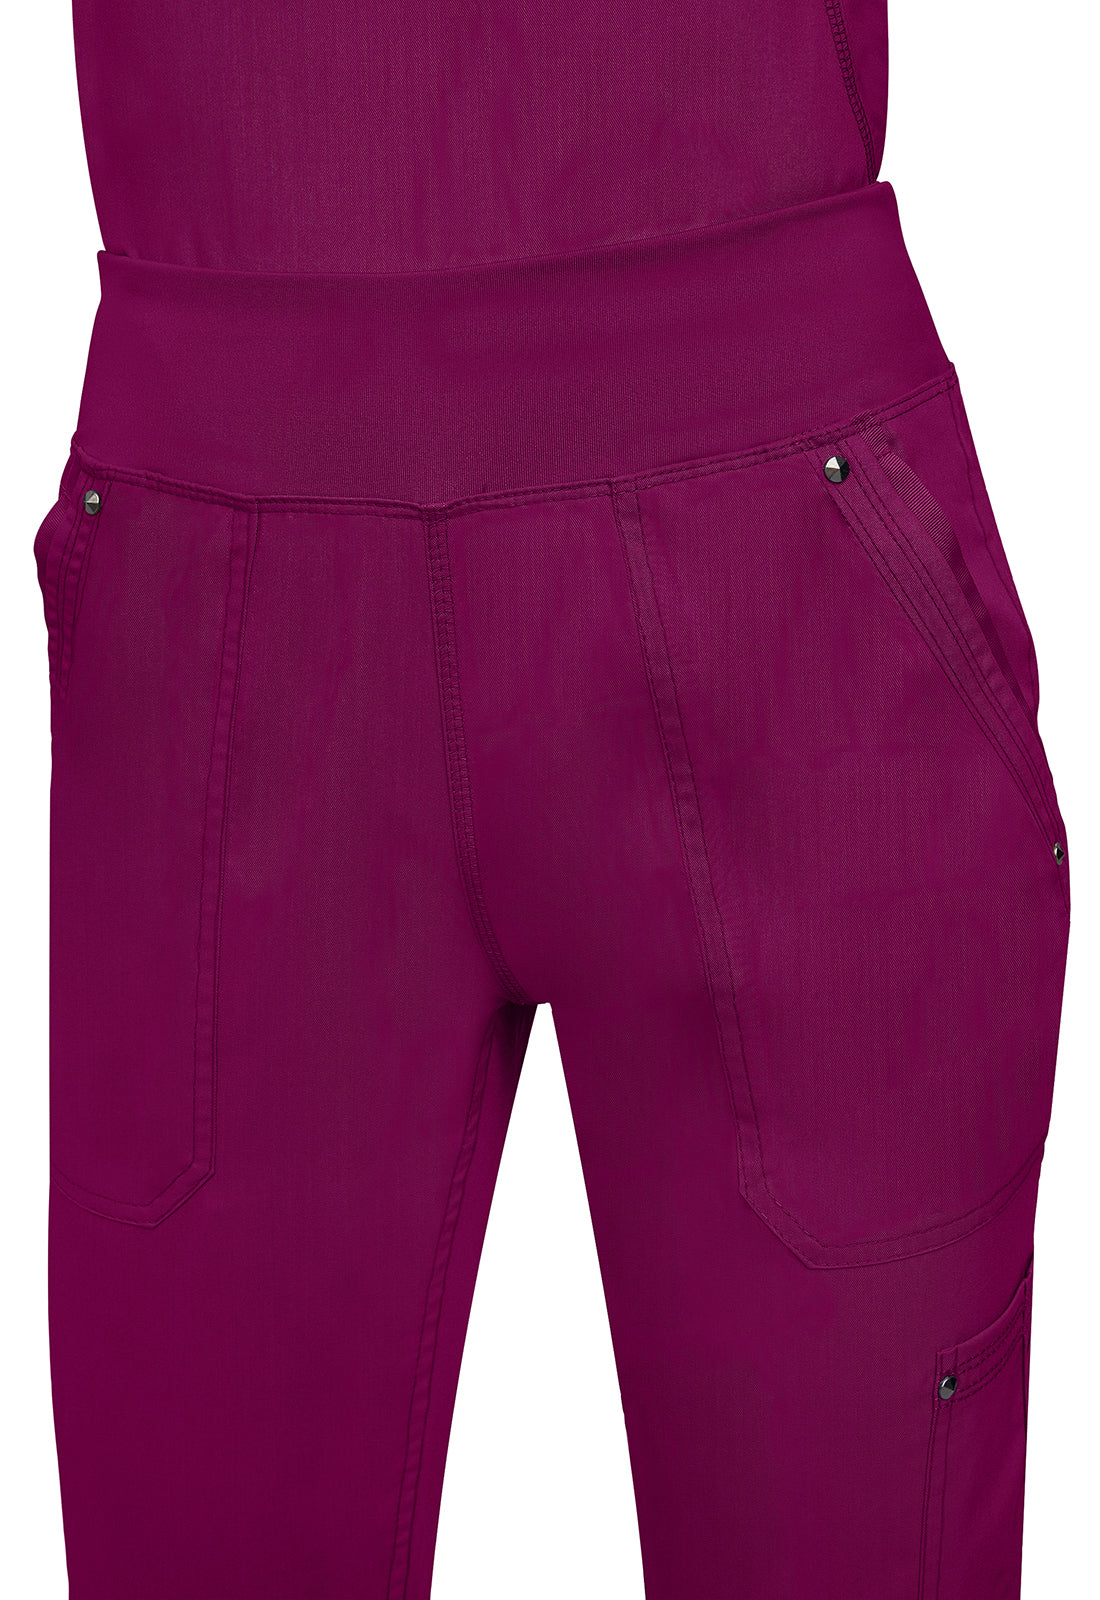 Healing Hands Purple Label Tori Yoga Pants (Regular Up to XL) – Berani  Femme Couture Scrubwear & Medical Supply